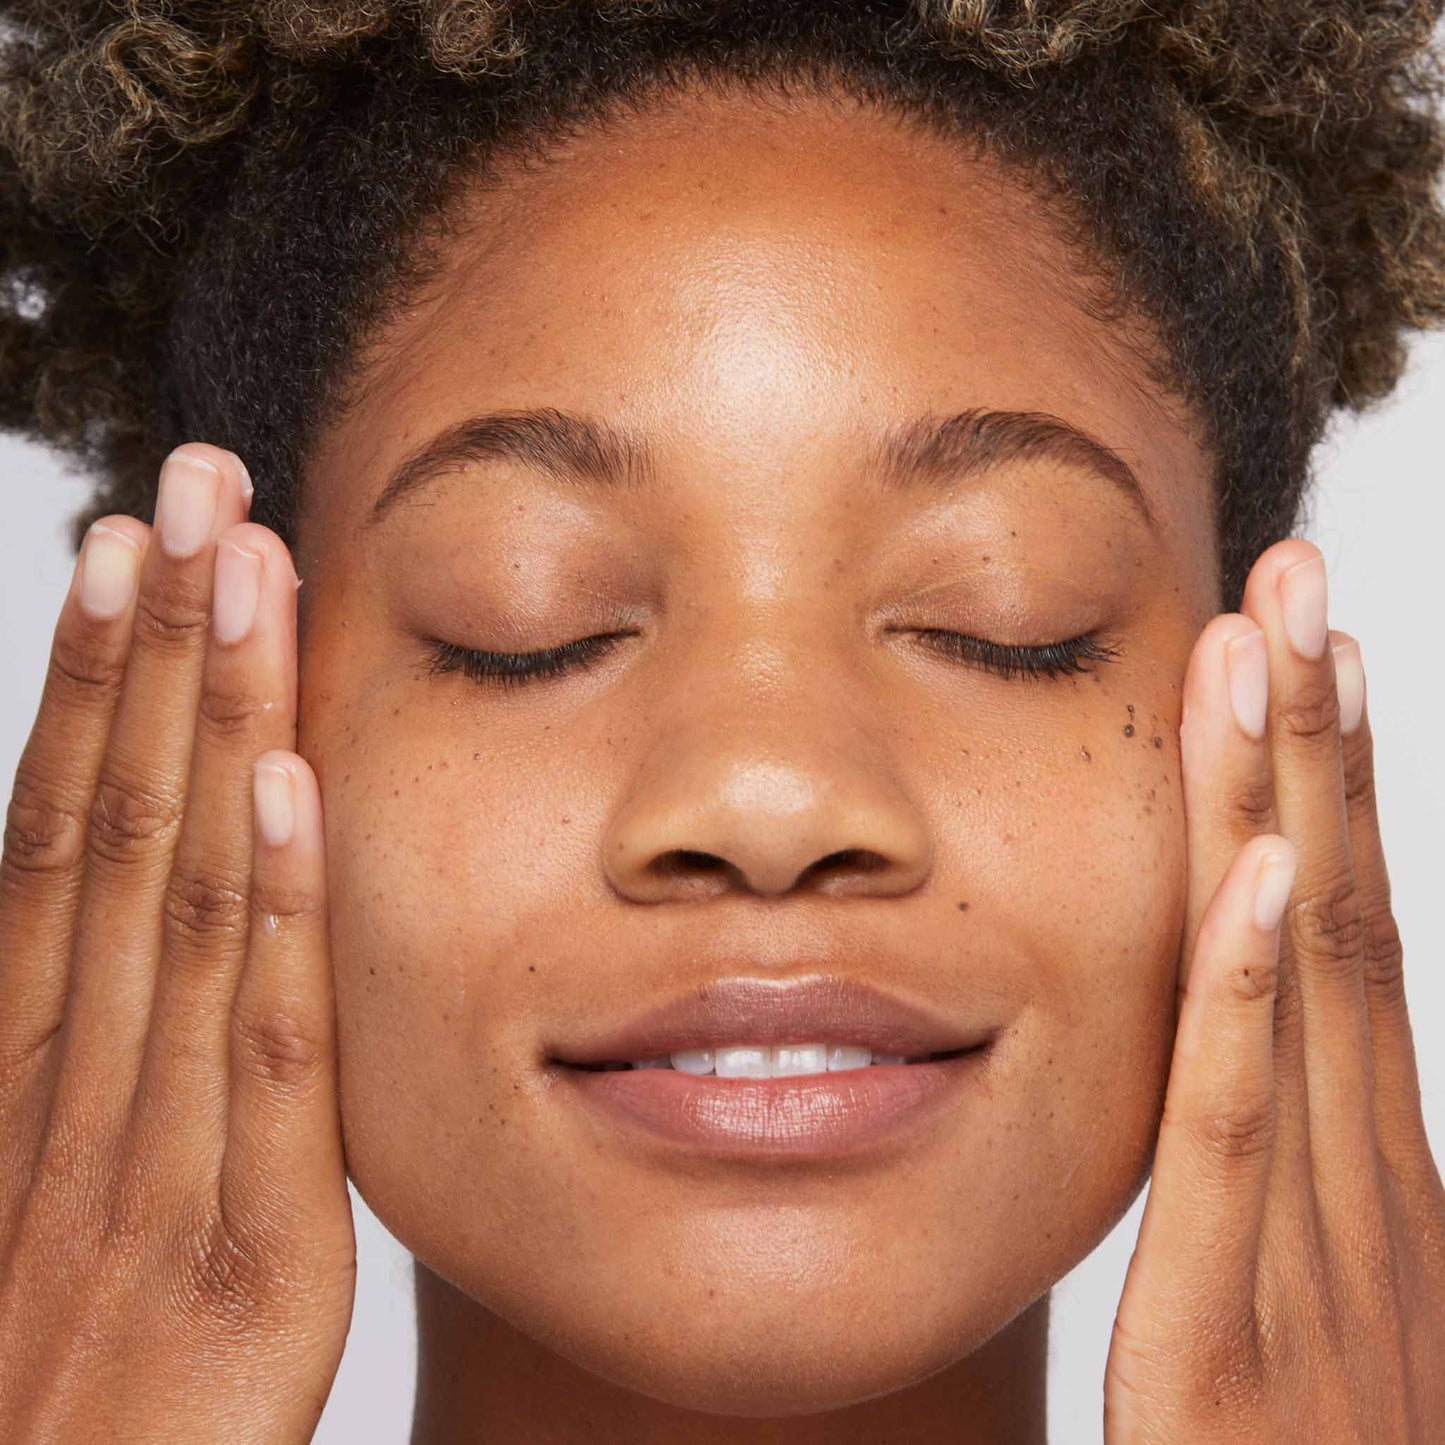 woman applying sound sleep cocoon onto face